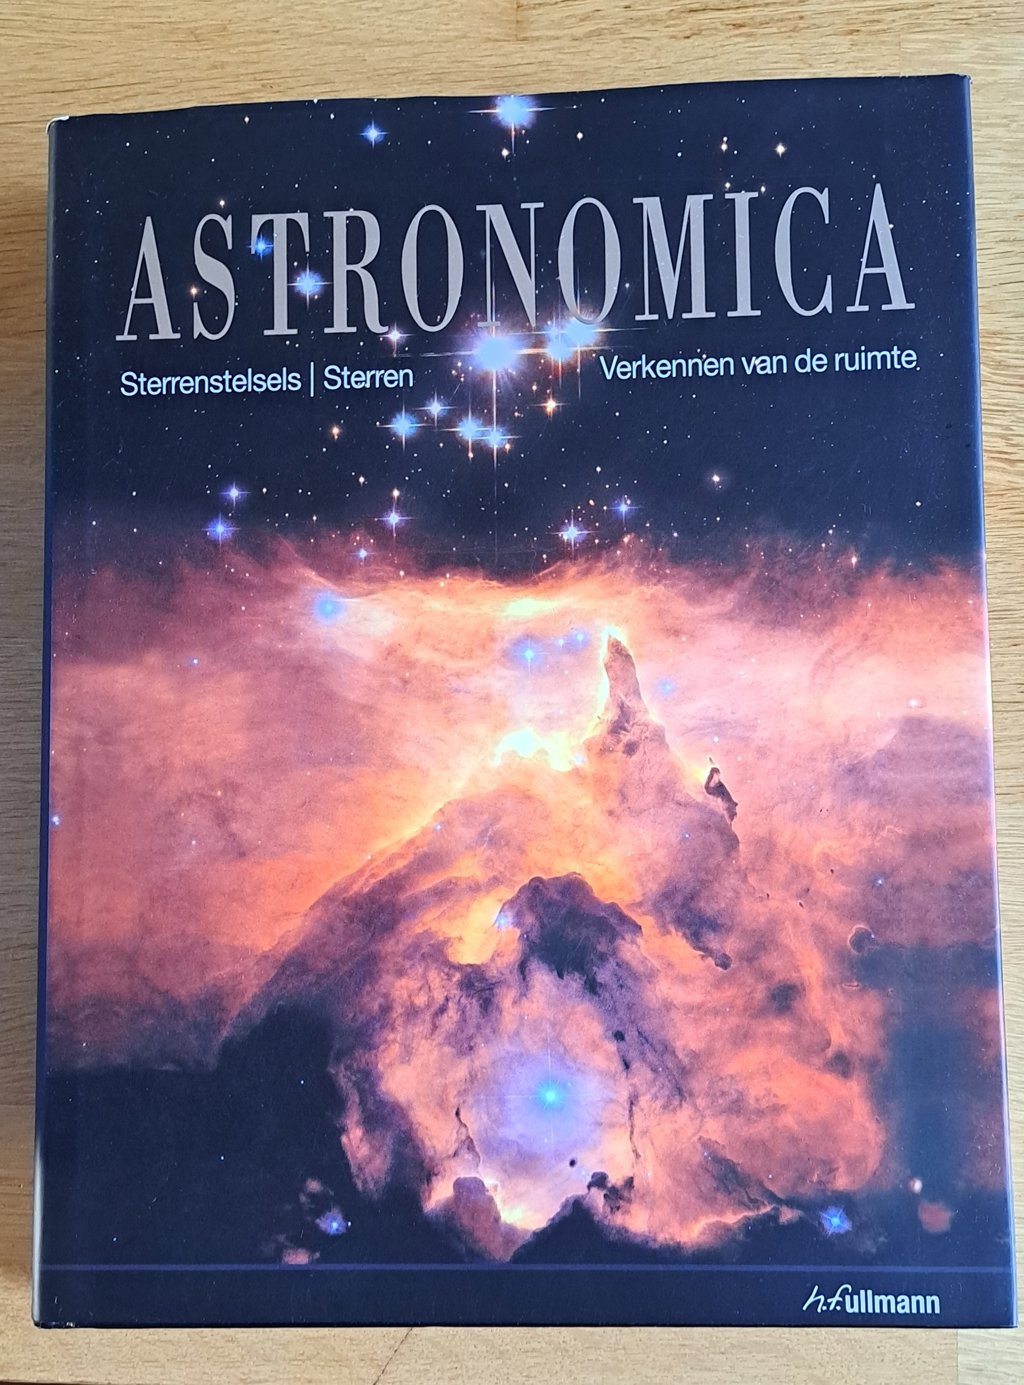 Astronomica